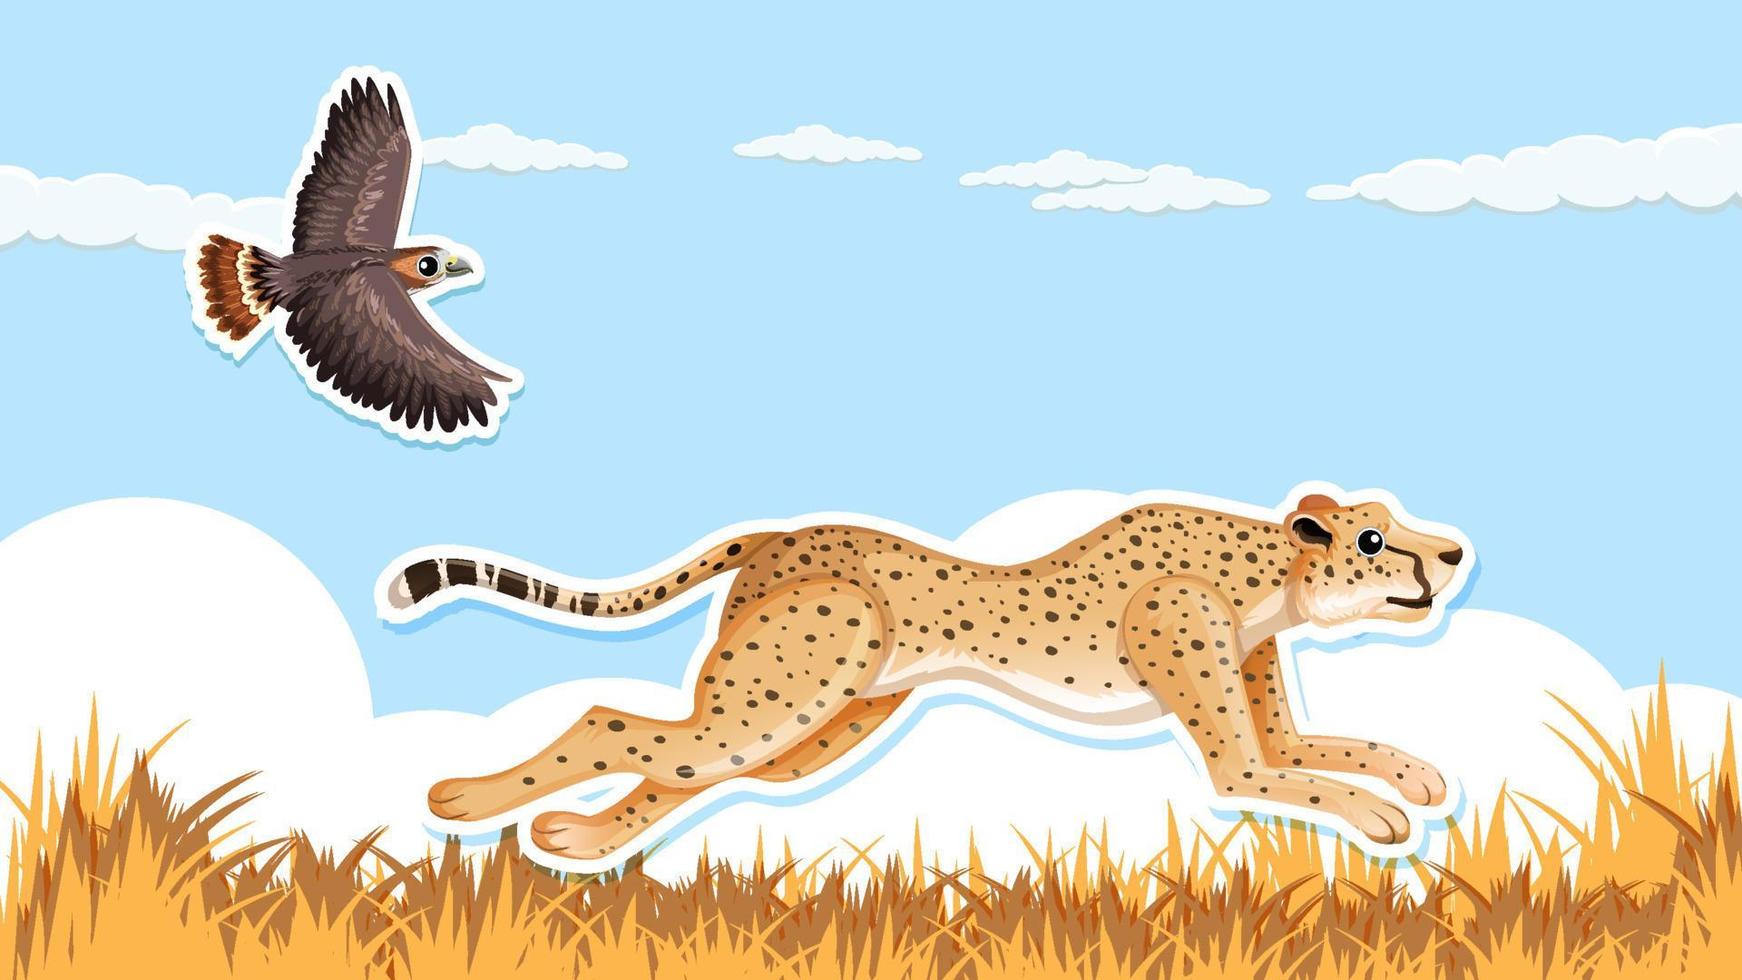 Thumbnail-Design mit Leopardenlauf und Falke vektor